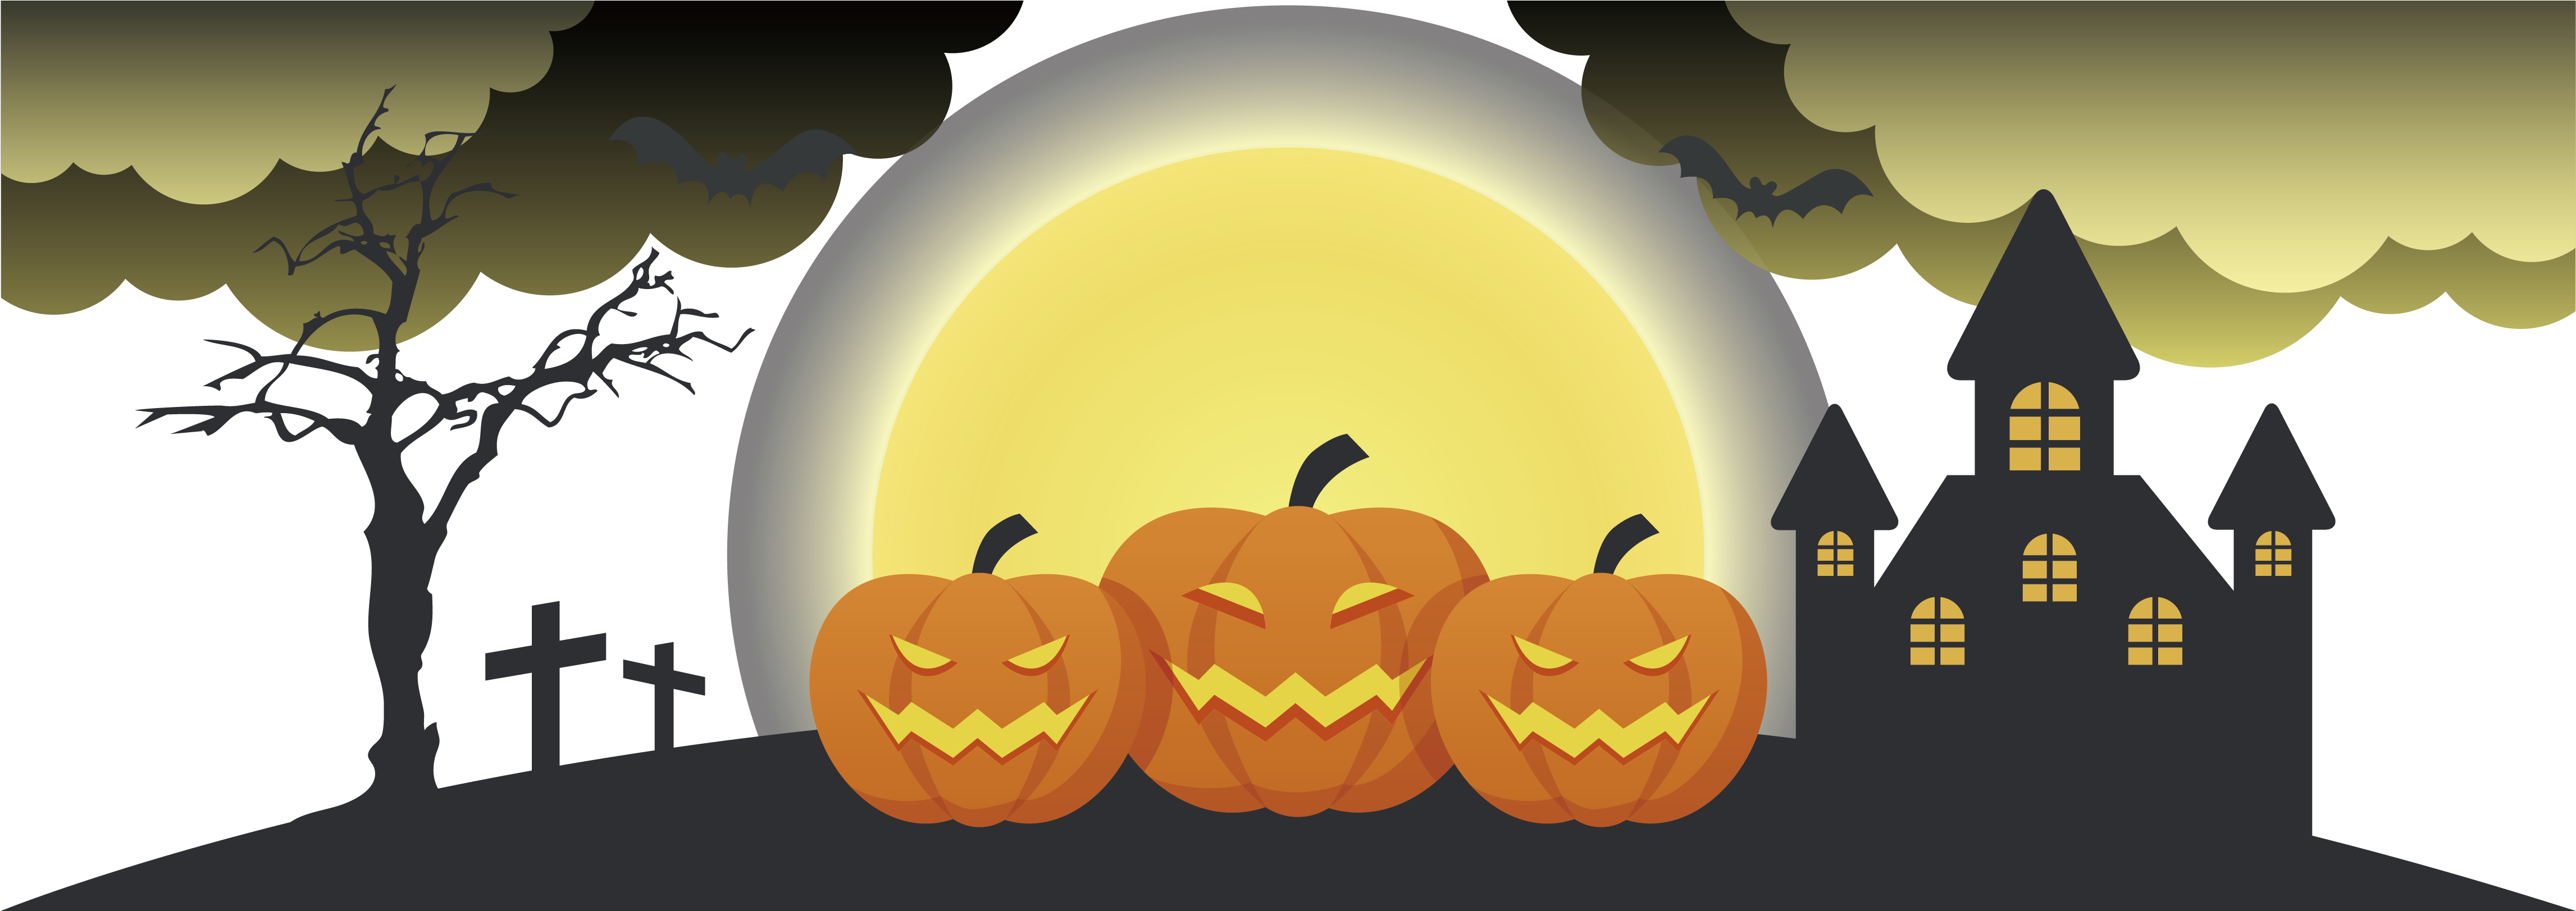 Imagens transparentes de banner de Halloween